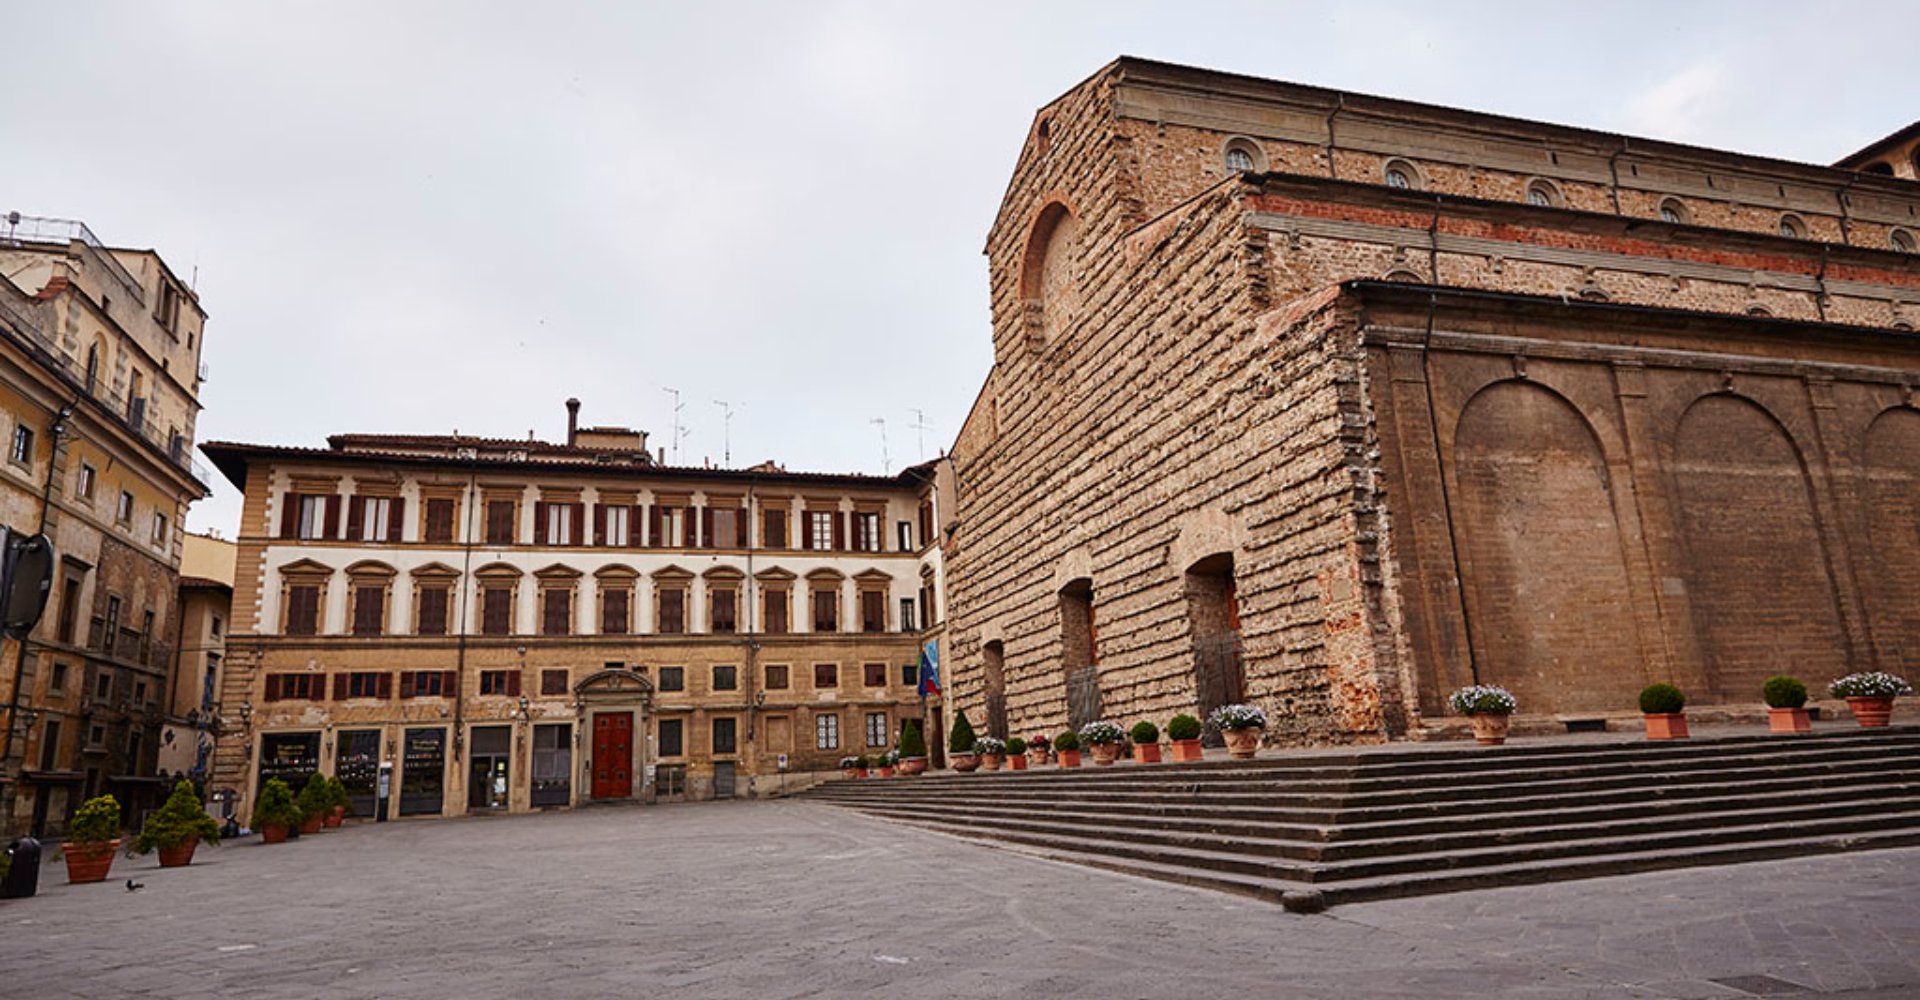 San Lorenzo, Firenze